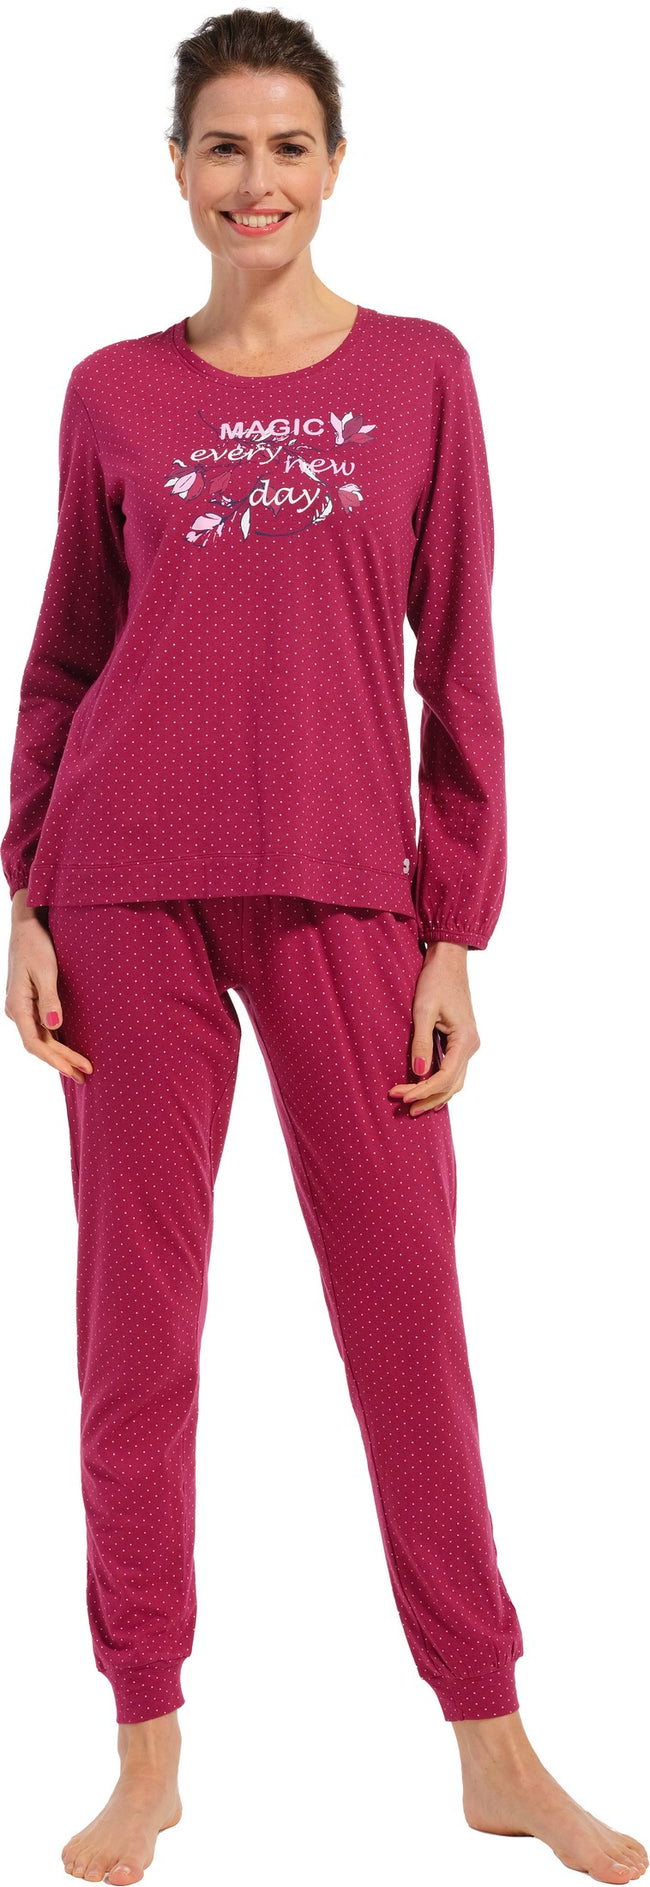 20232-102-2 Pastunette pyjama